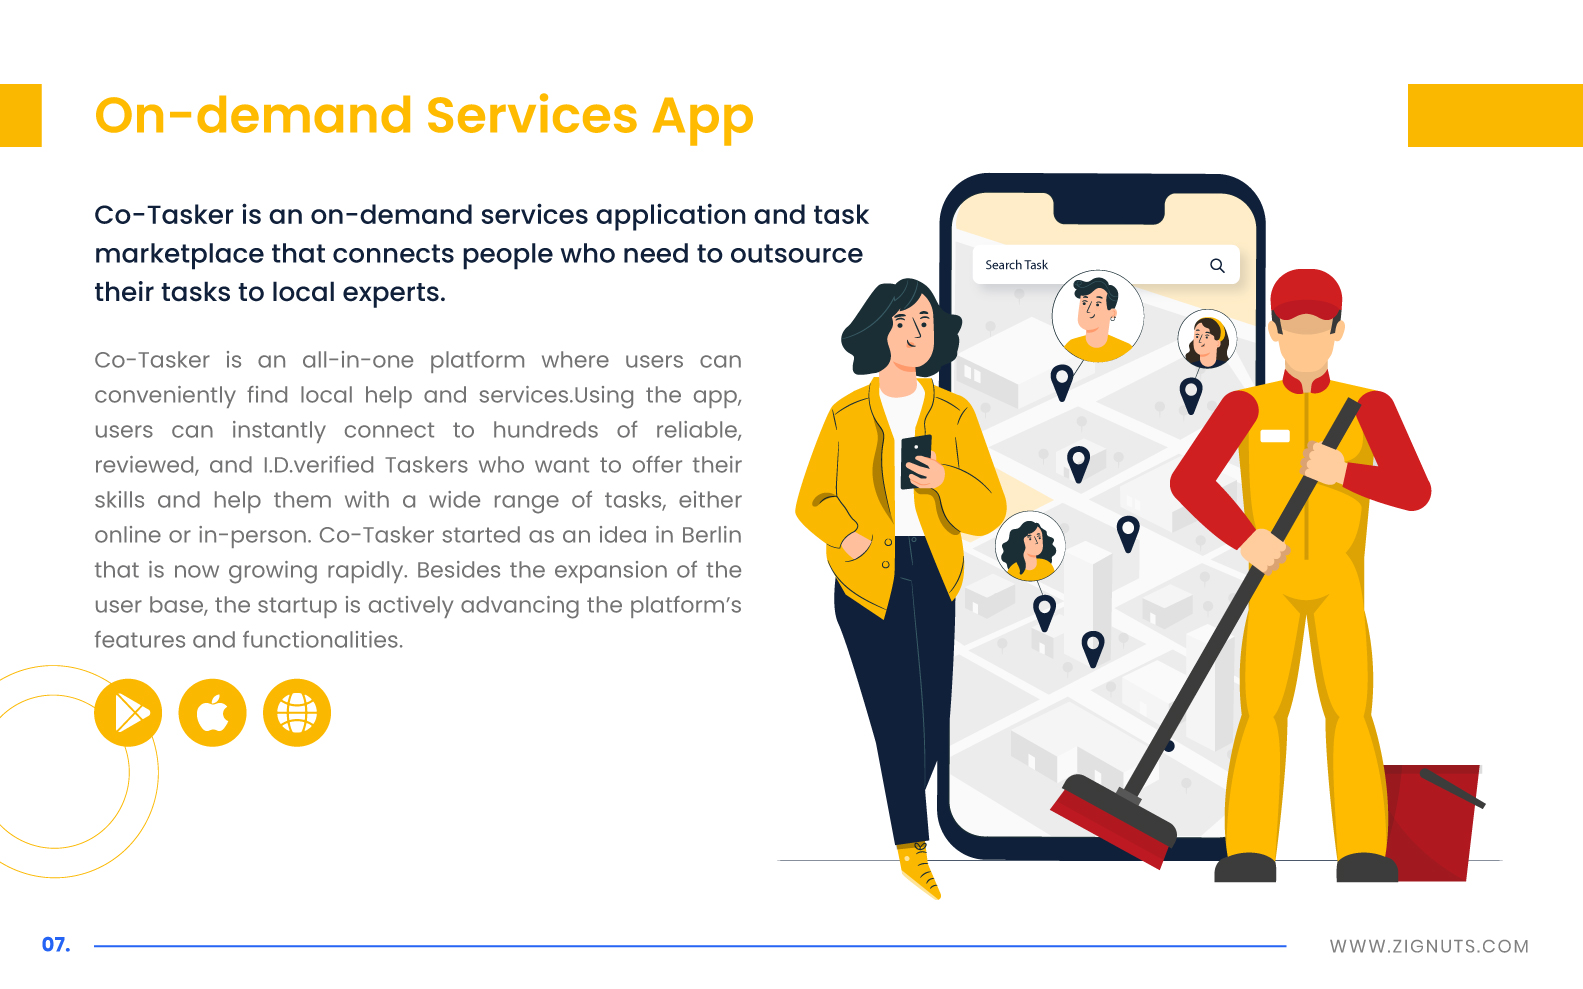 On-demand Services App